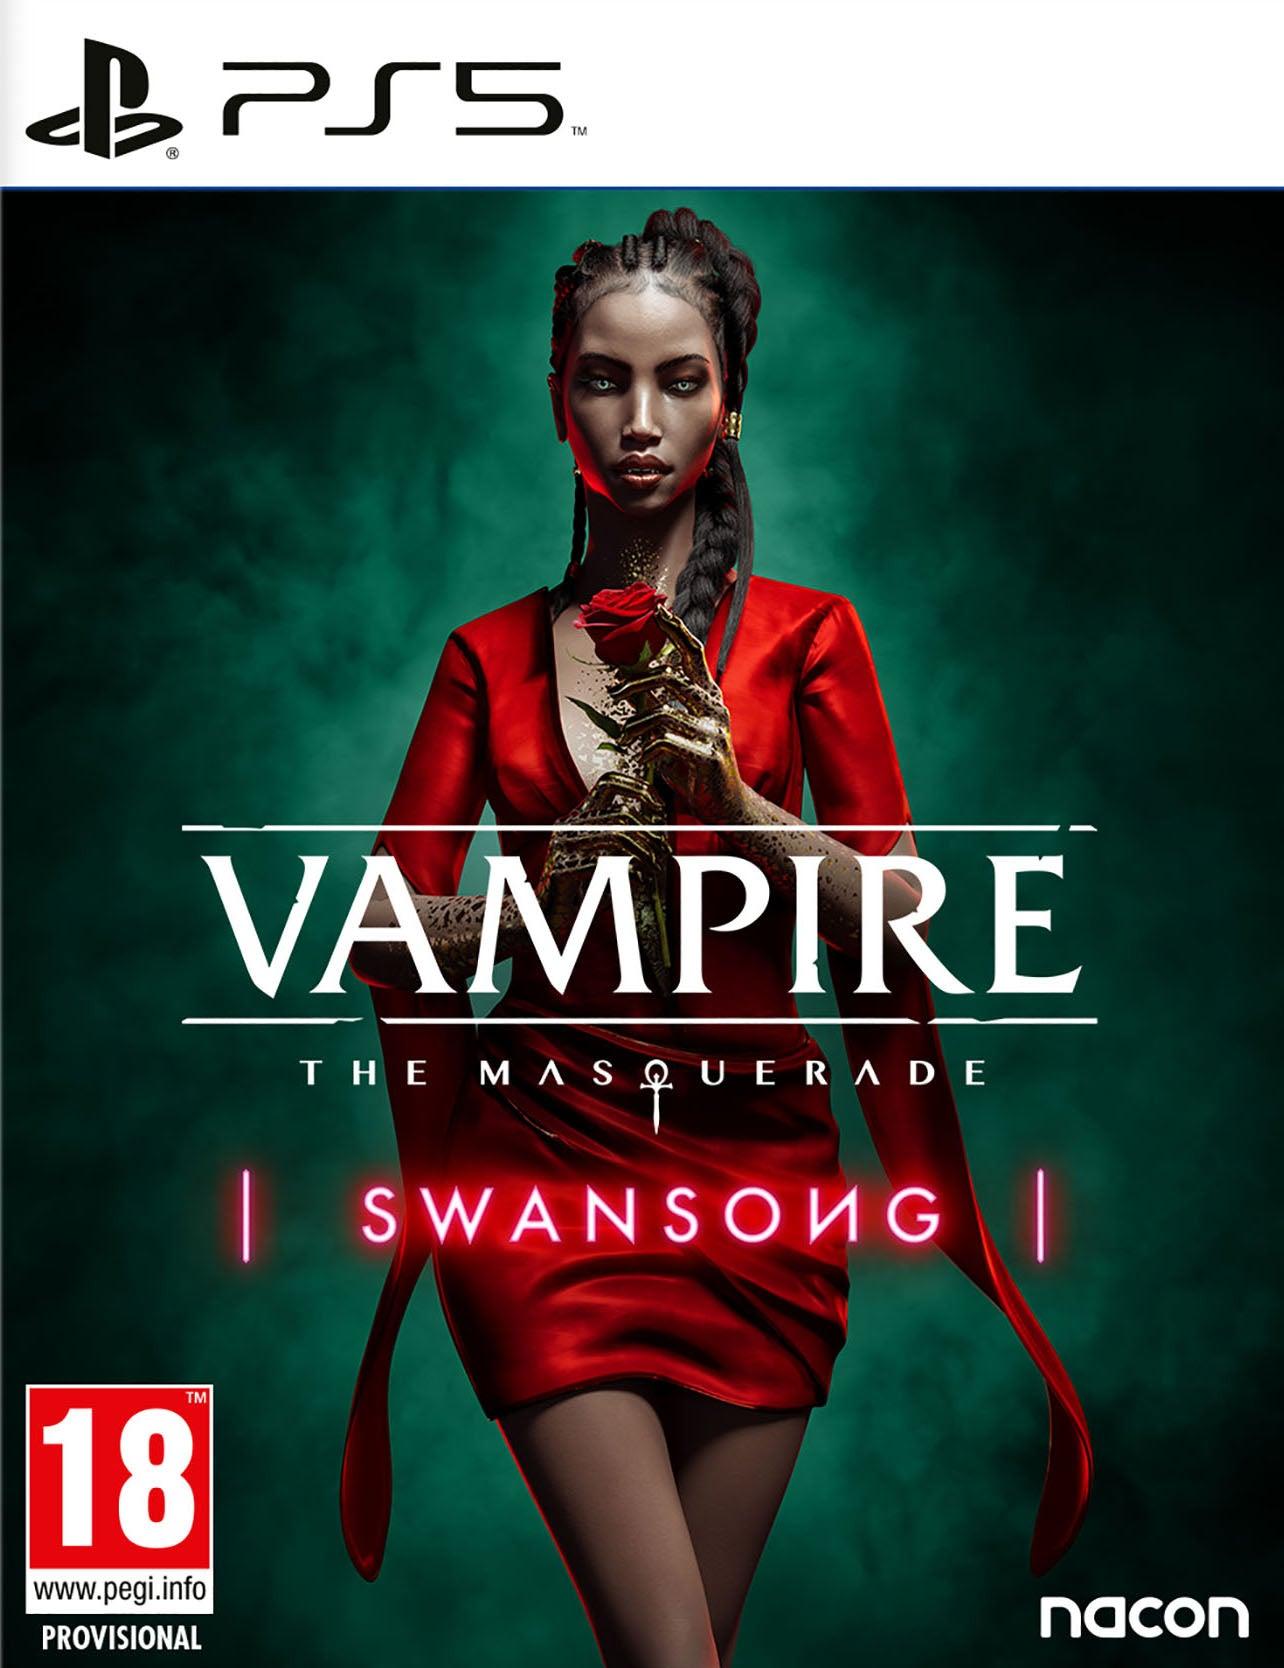 Vampire Masquerade Swansong - Want a New Gadget